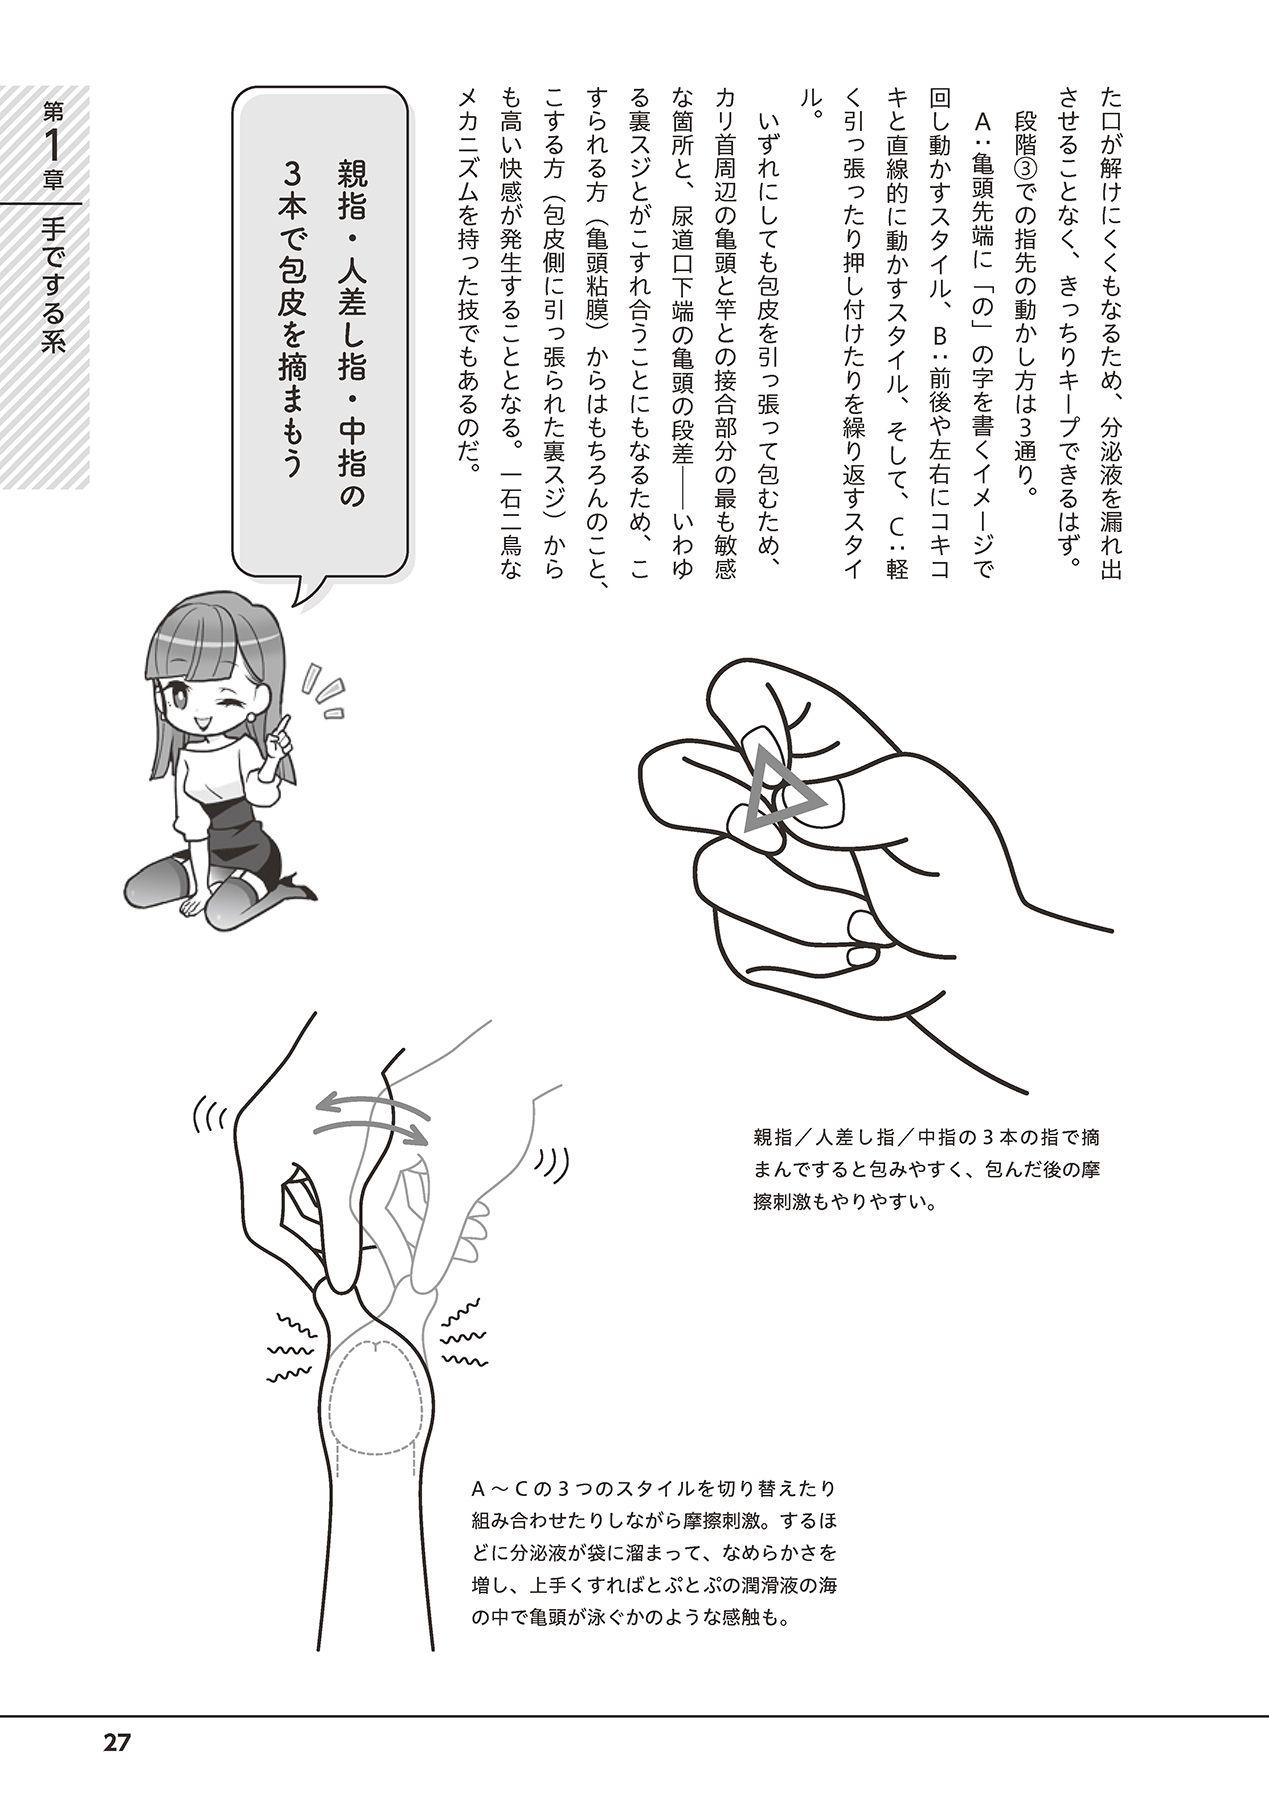 Otoko no Jii Onanie Kanzen Manual Illustration Han...... Onanie Play 28